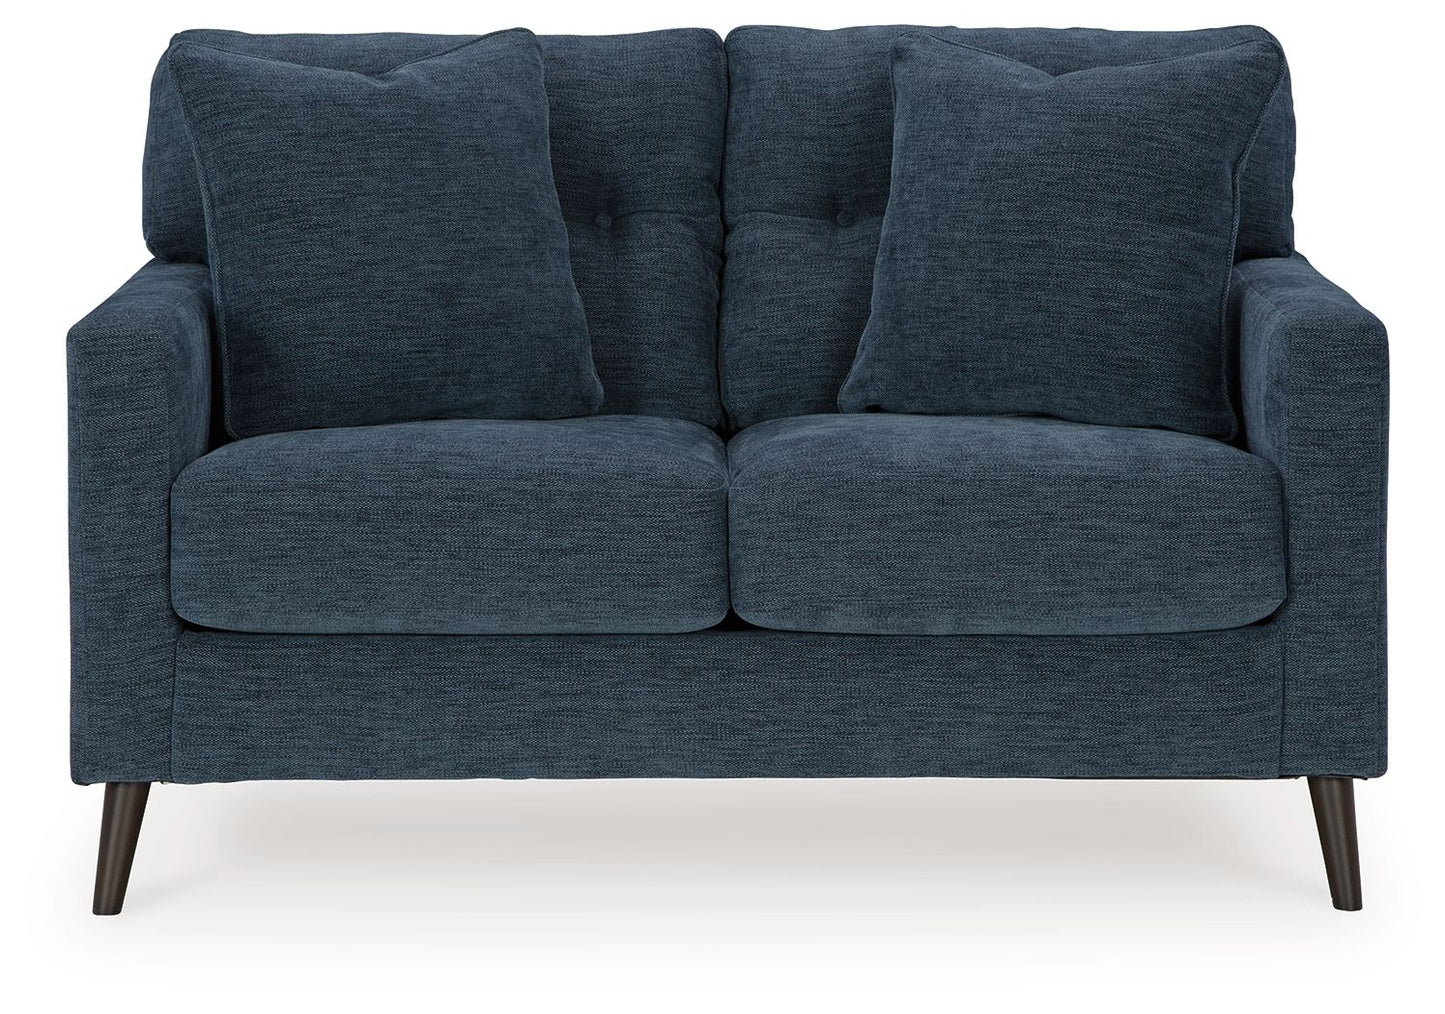 Bixler - Navy - 3 Pc. - Sofa, Loveseat, Accent Chair